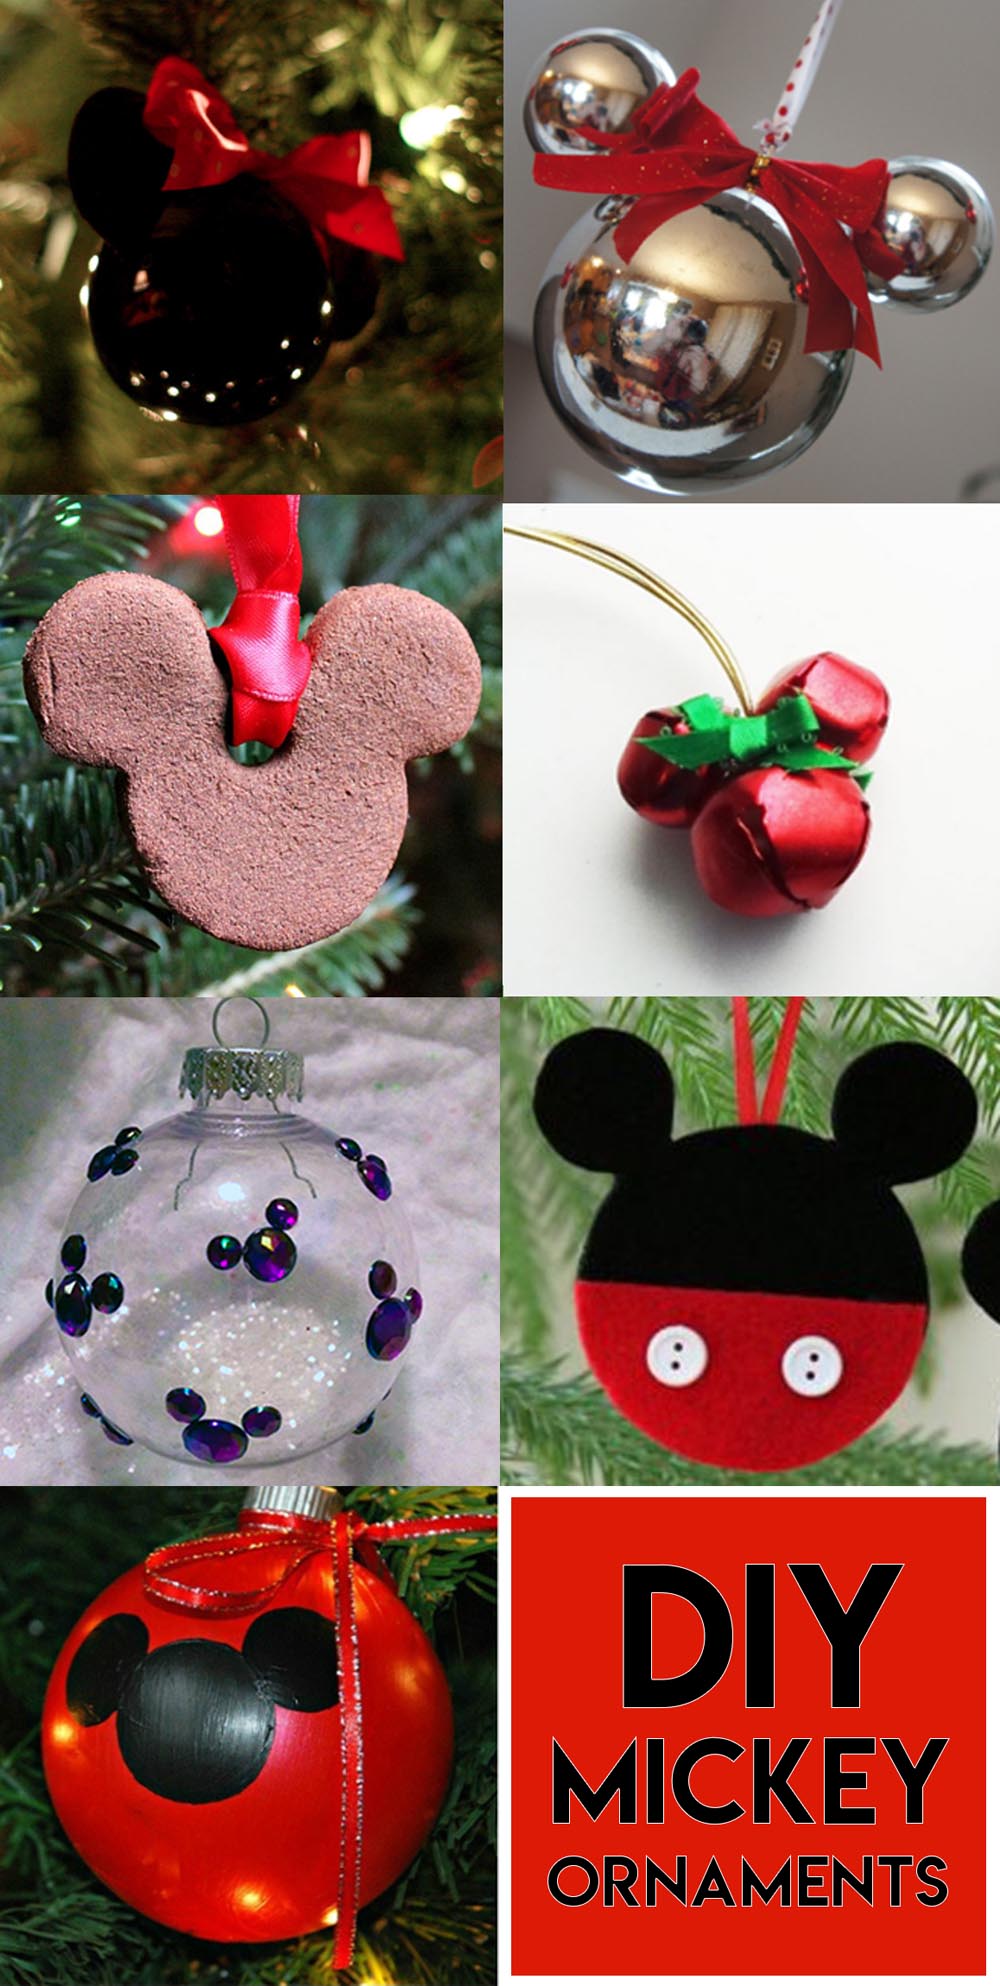 7 DIY Mickey Mouse Christmas Ornaments via @lara_neves